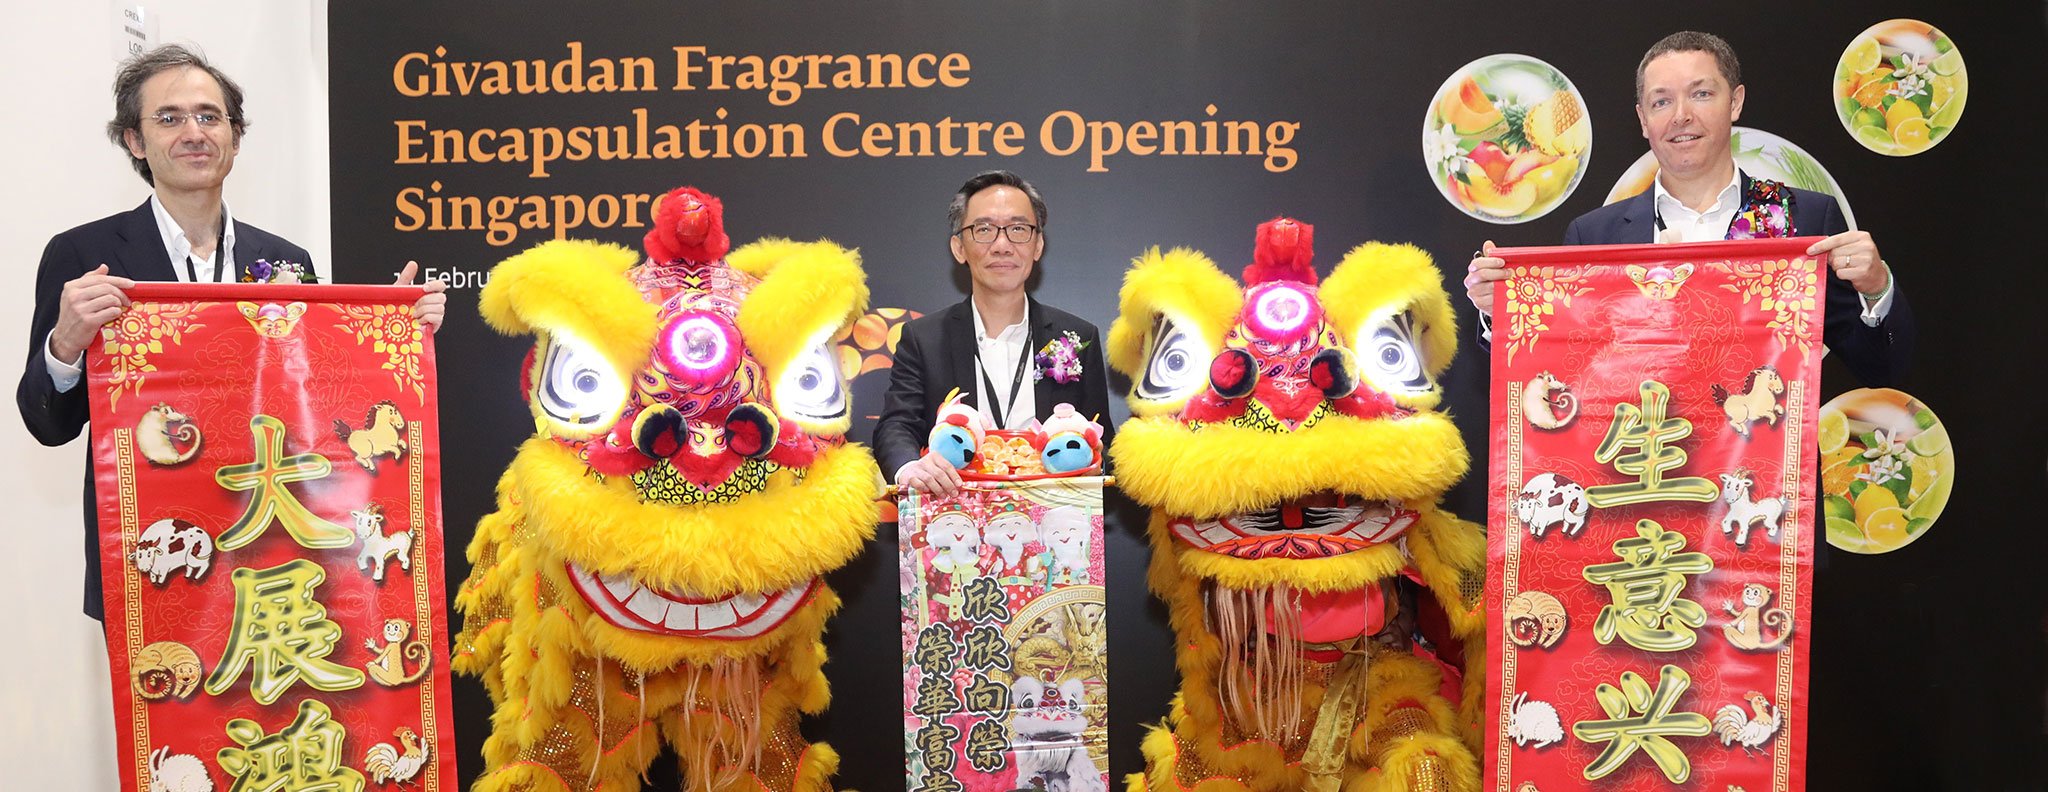 Inauguration of Givaudan's Fragrance Encapsulation Centre in Singapore